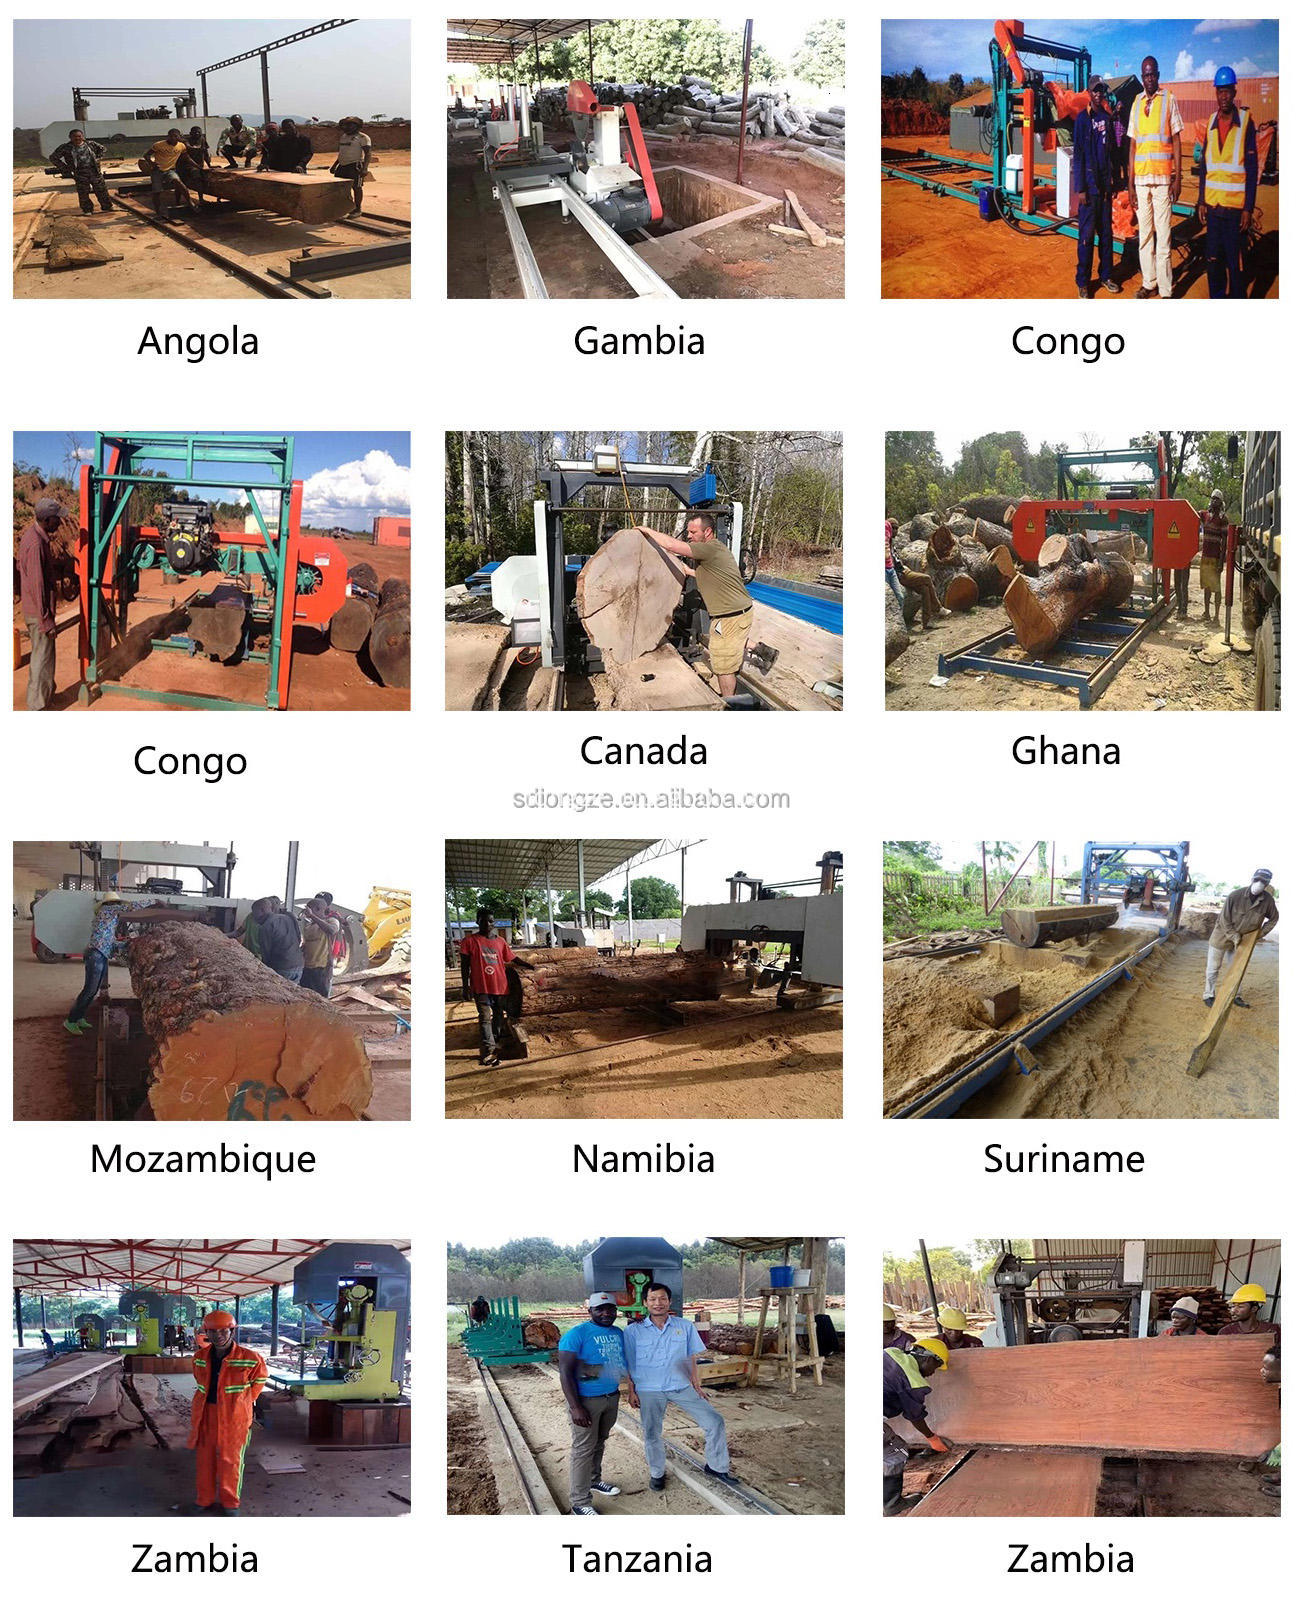 590mm China Factory Sw26 Log Timber Wood Horizontal Cutting Band Sawmill Machine para venda